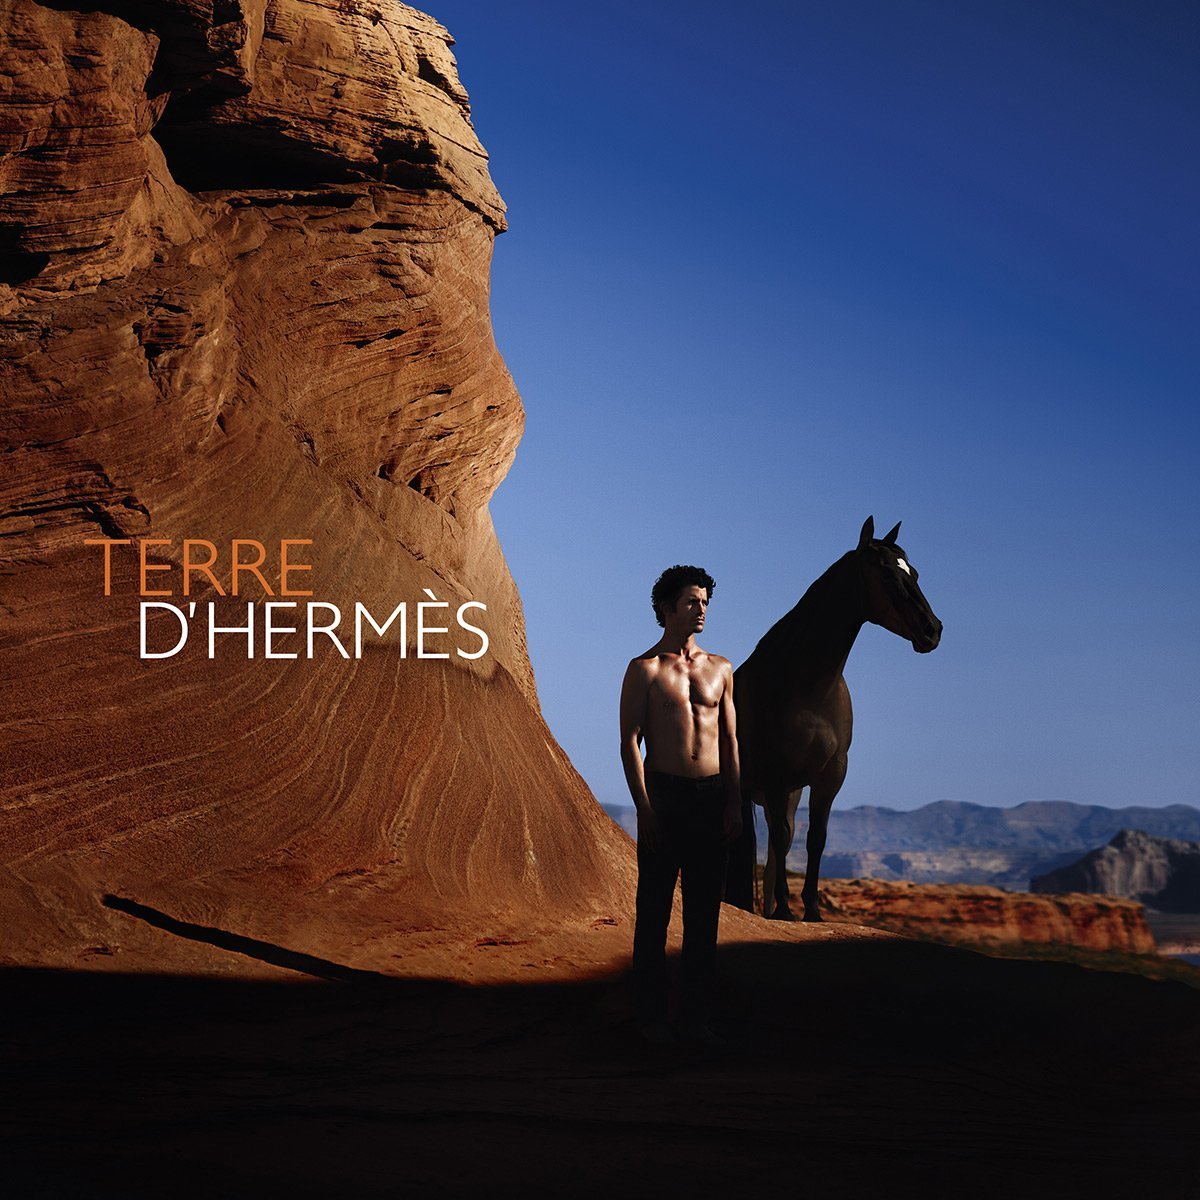 HERMÈS Terre d'Hermès Eau Intense Vétiver EDP - My Perfume Shop Australia